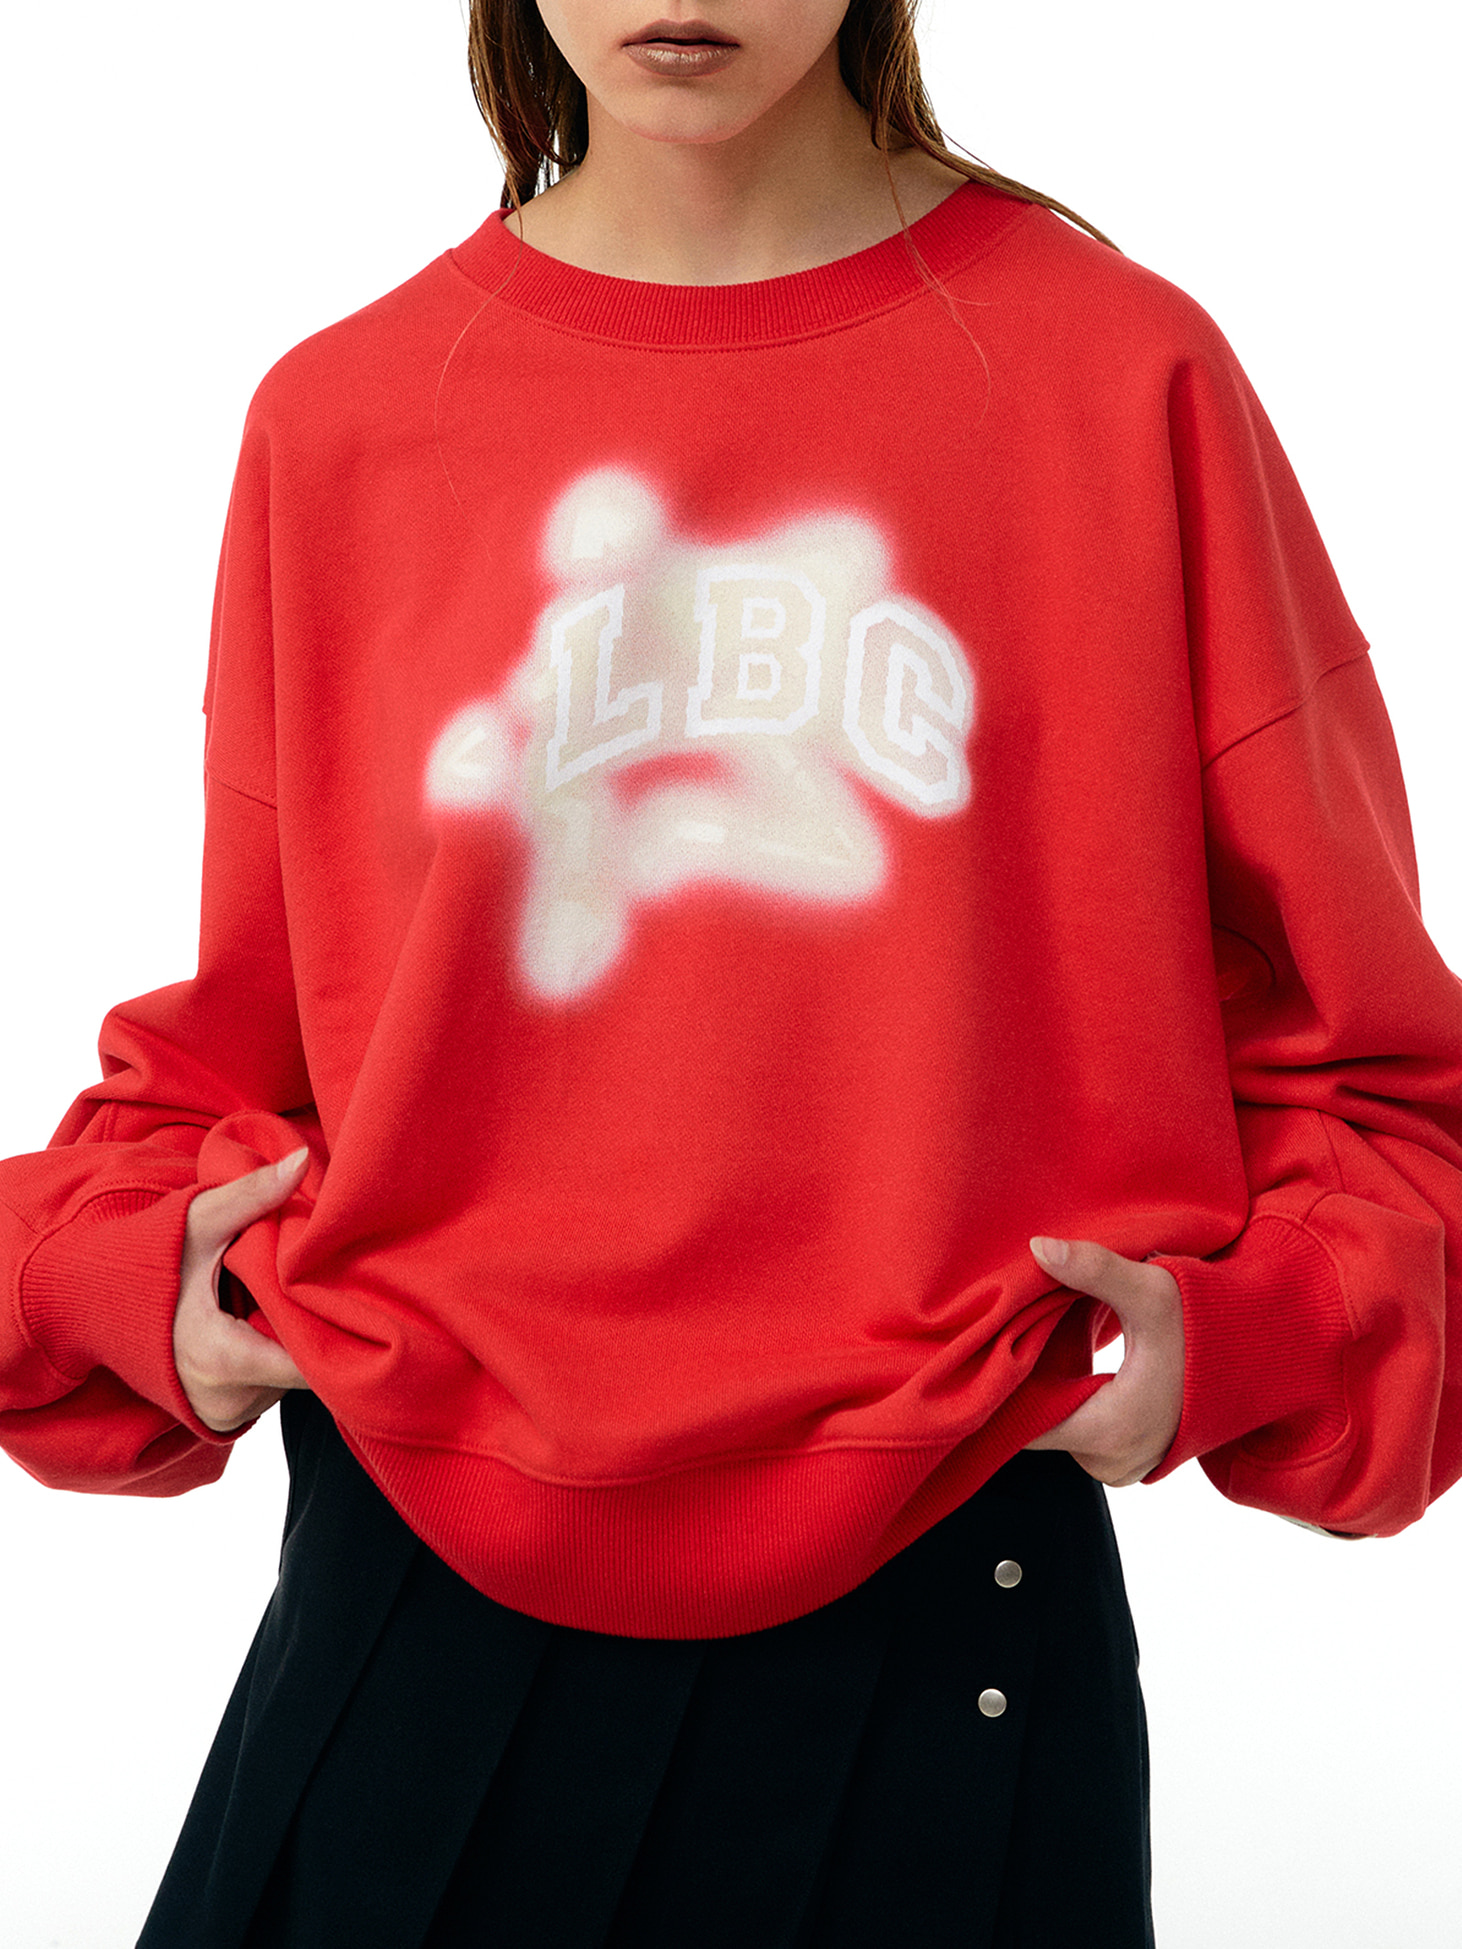 Star LBC sweatshirt / Red